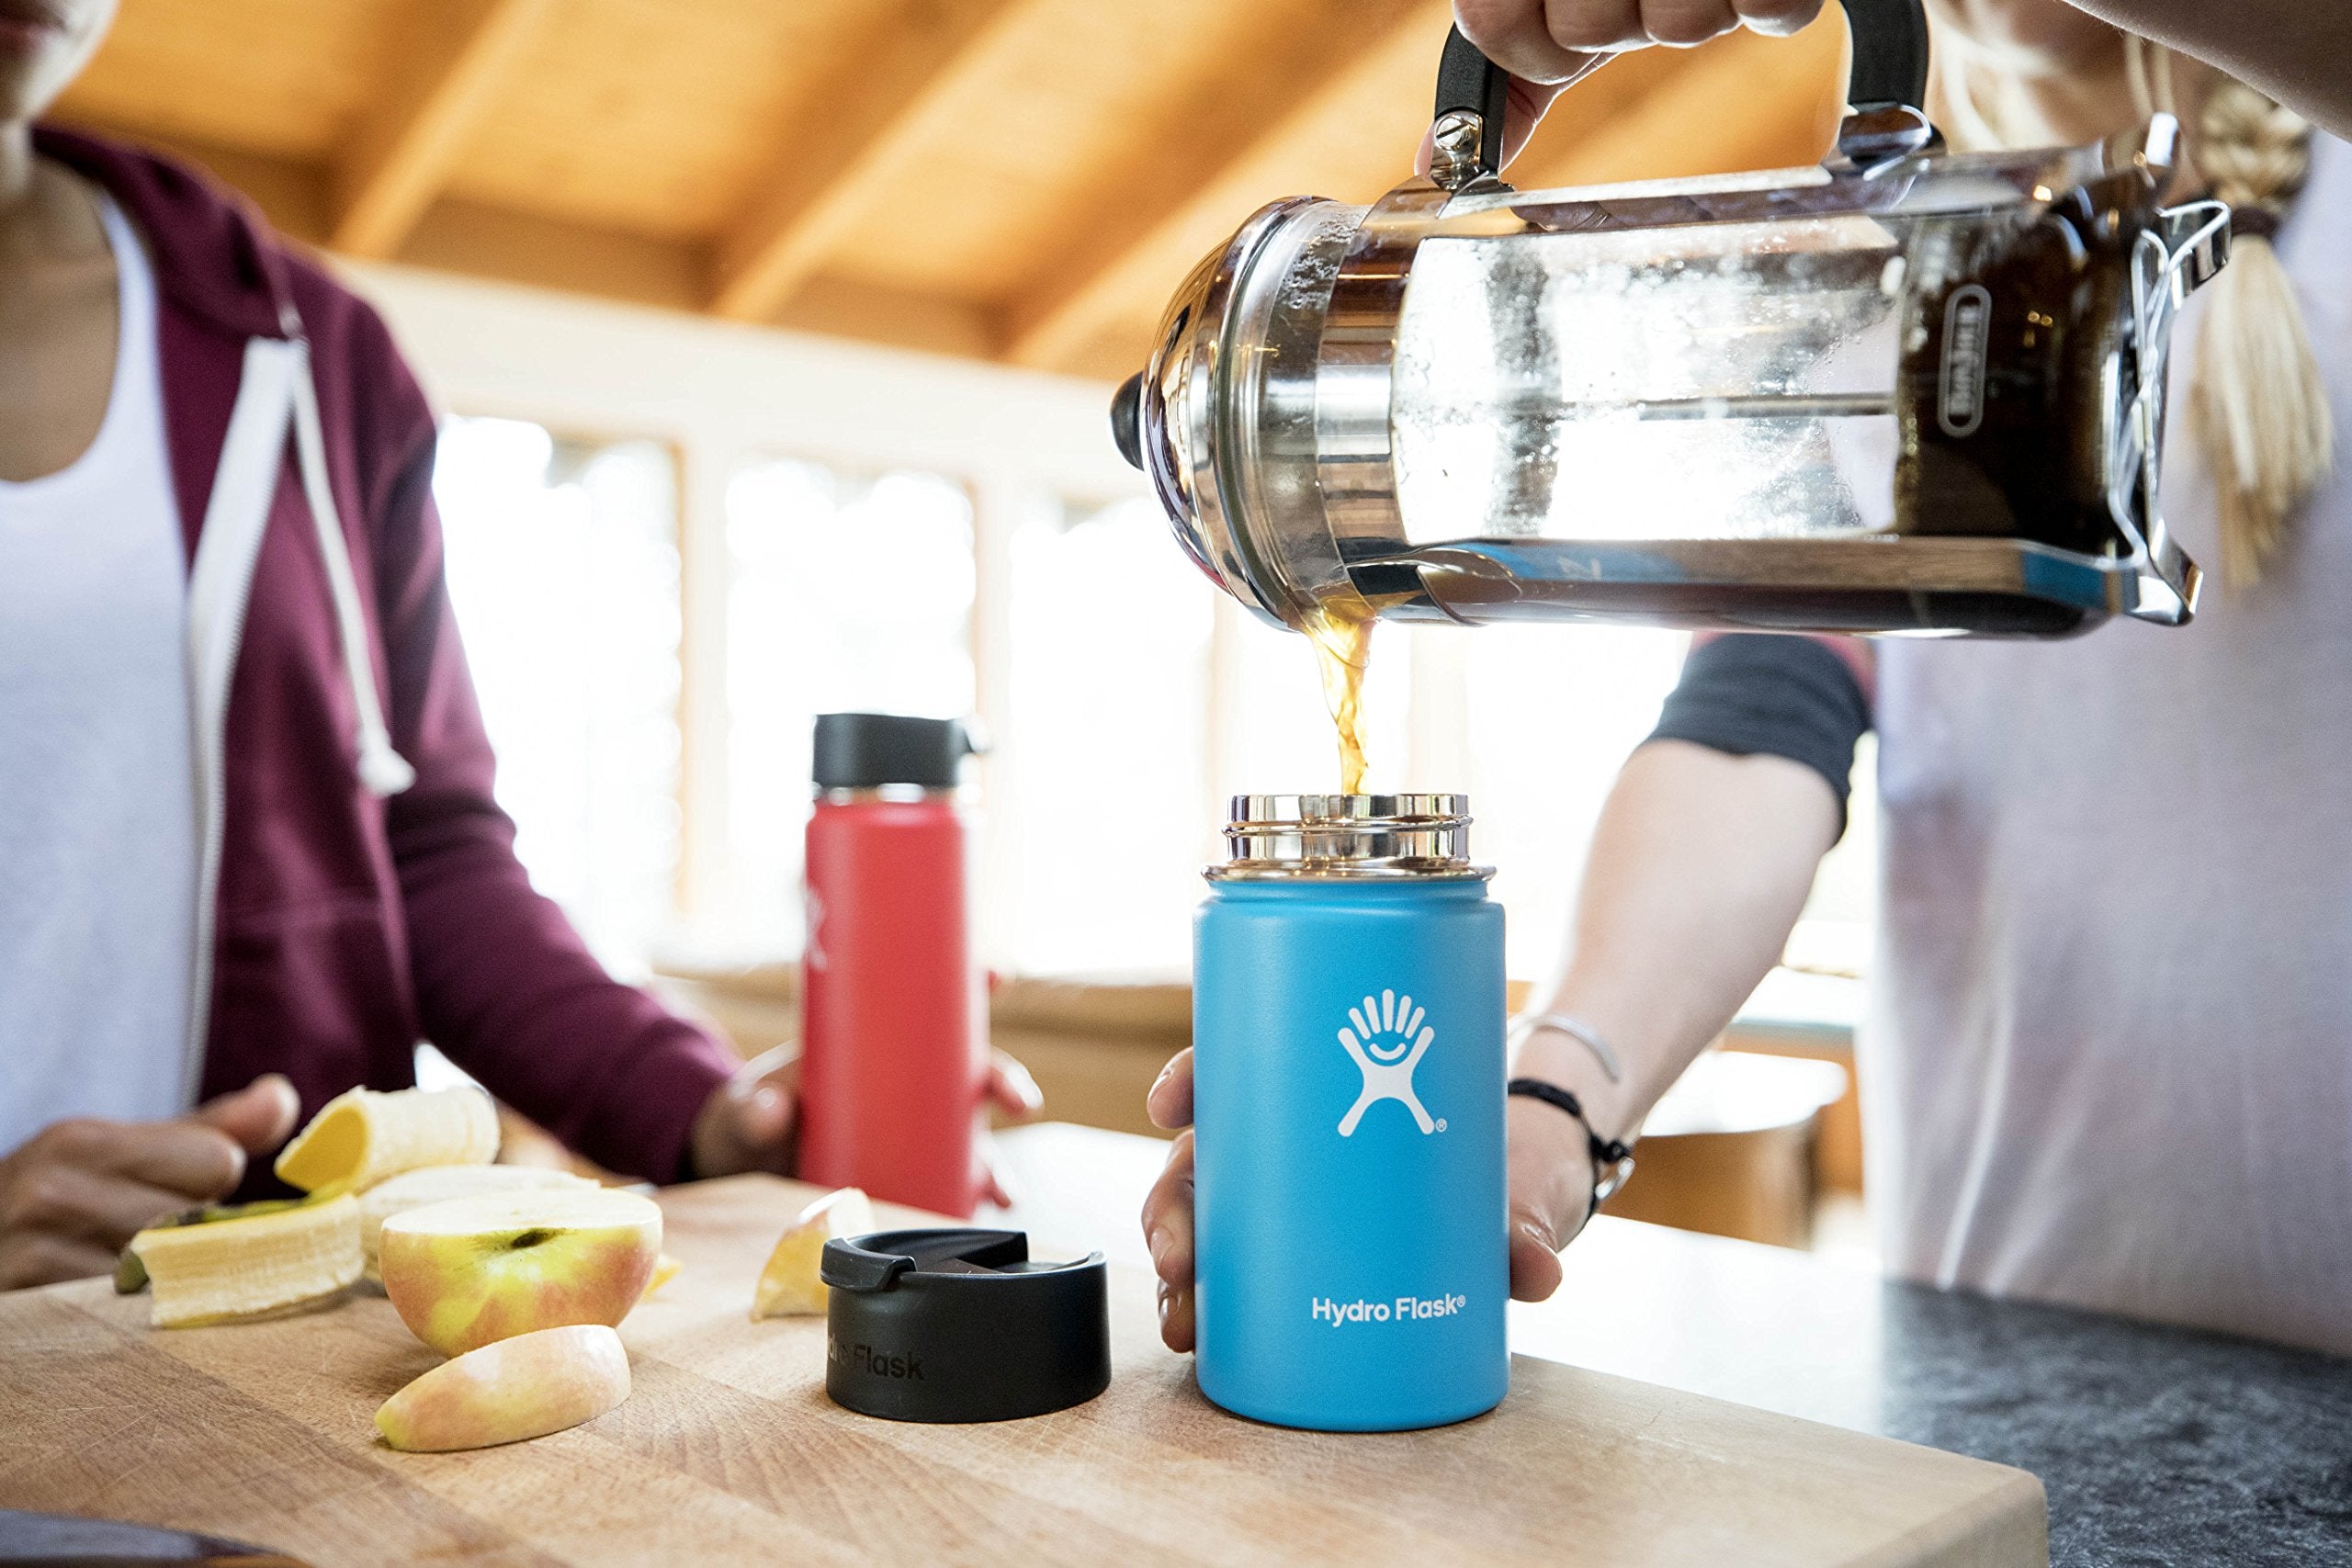 Hydro Flask, Dining, Hydro Flask Coffee Mug 24 Oz In Rain Light Blue